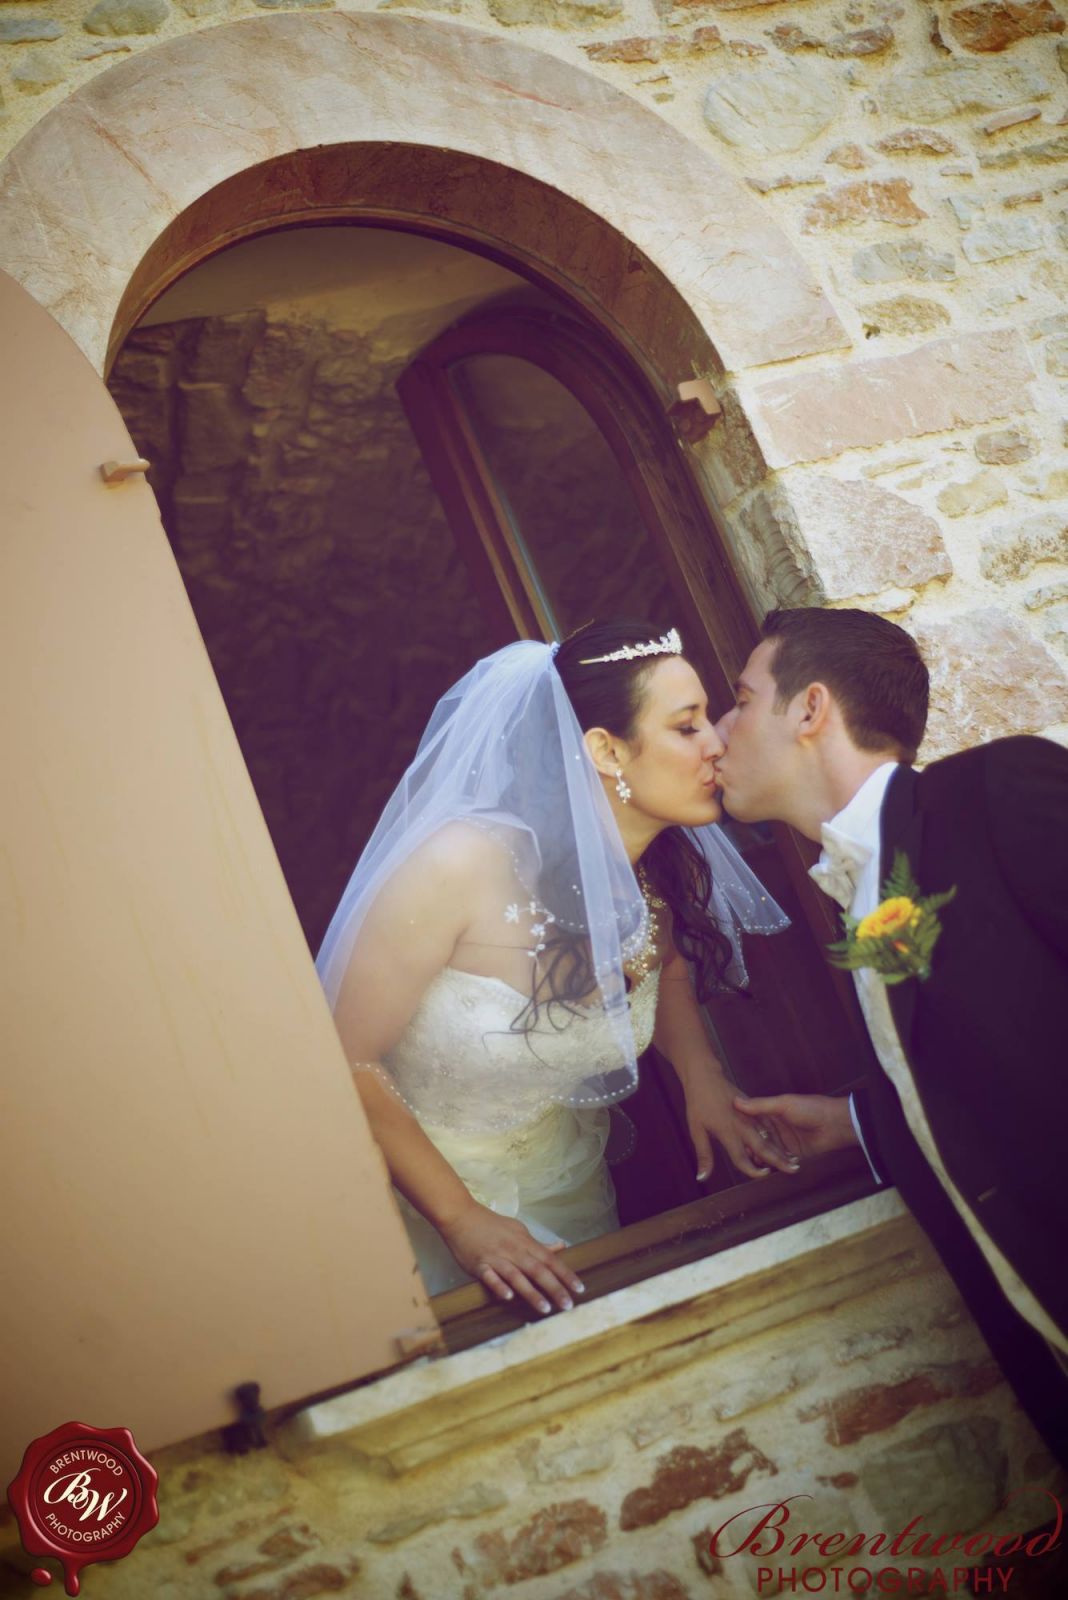 Lauren and Anthony Villa Wedding in Italy